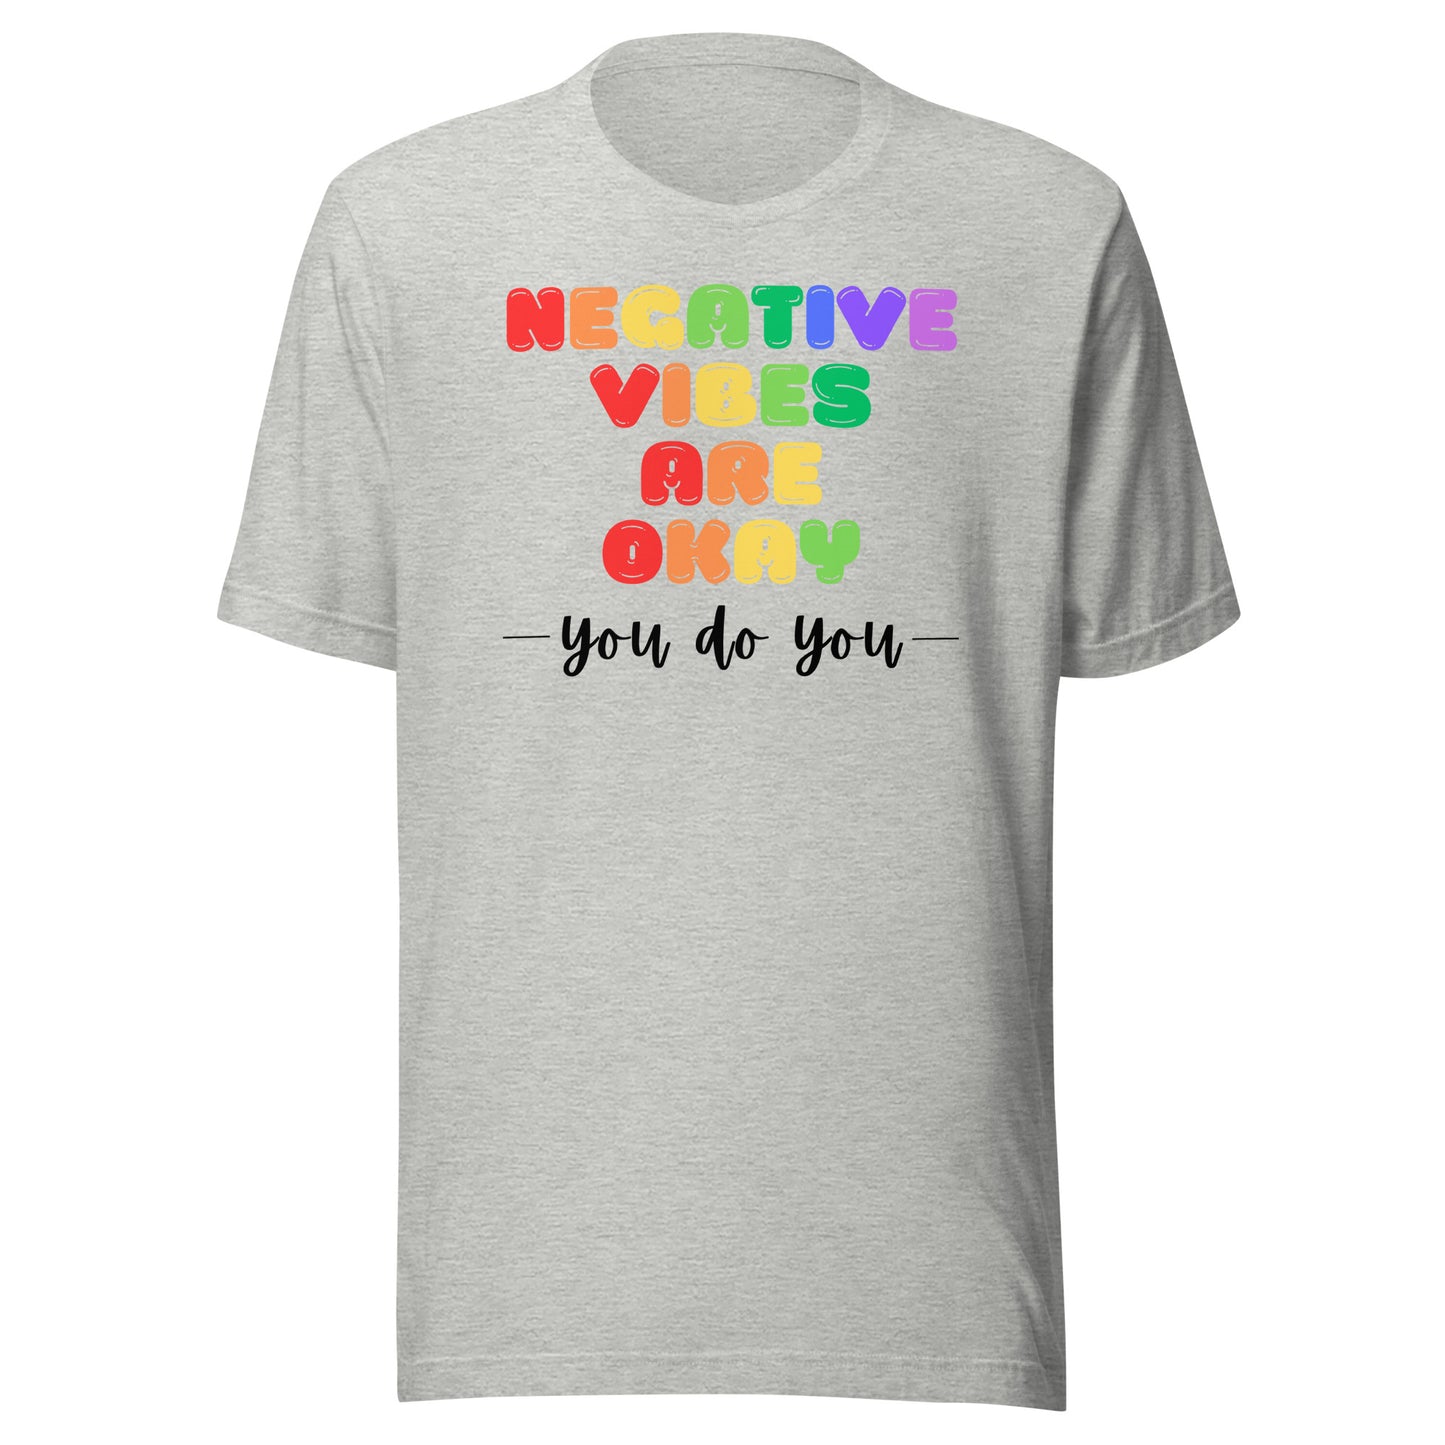 Negative Vibes are Okay - Light Unisex t-shirt